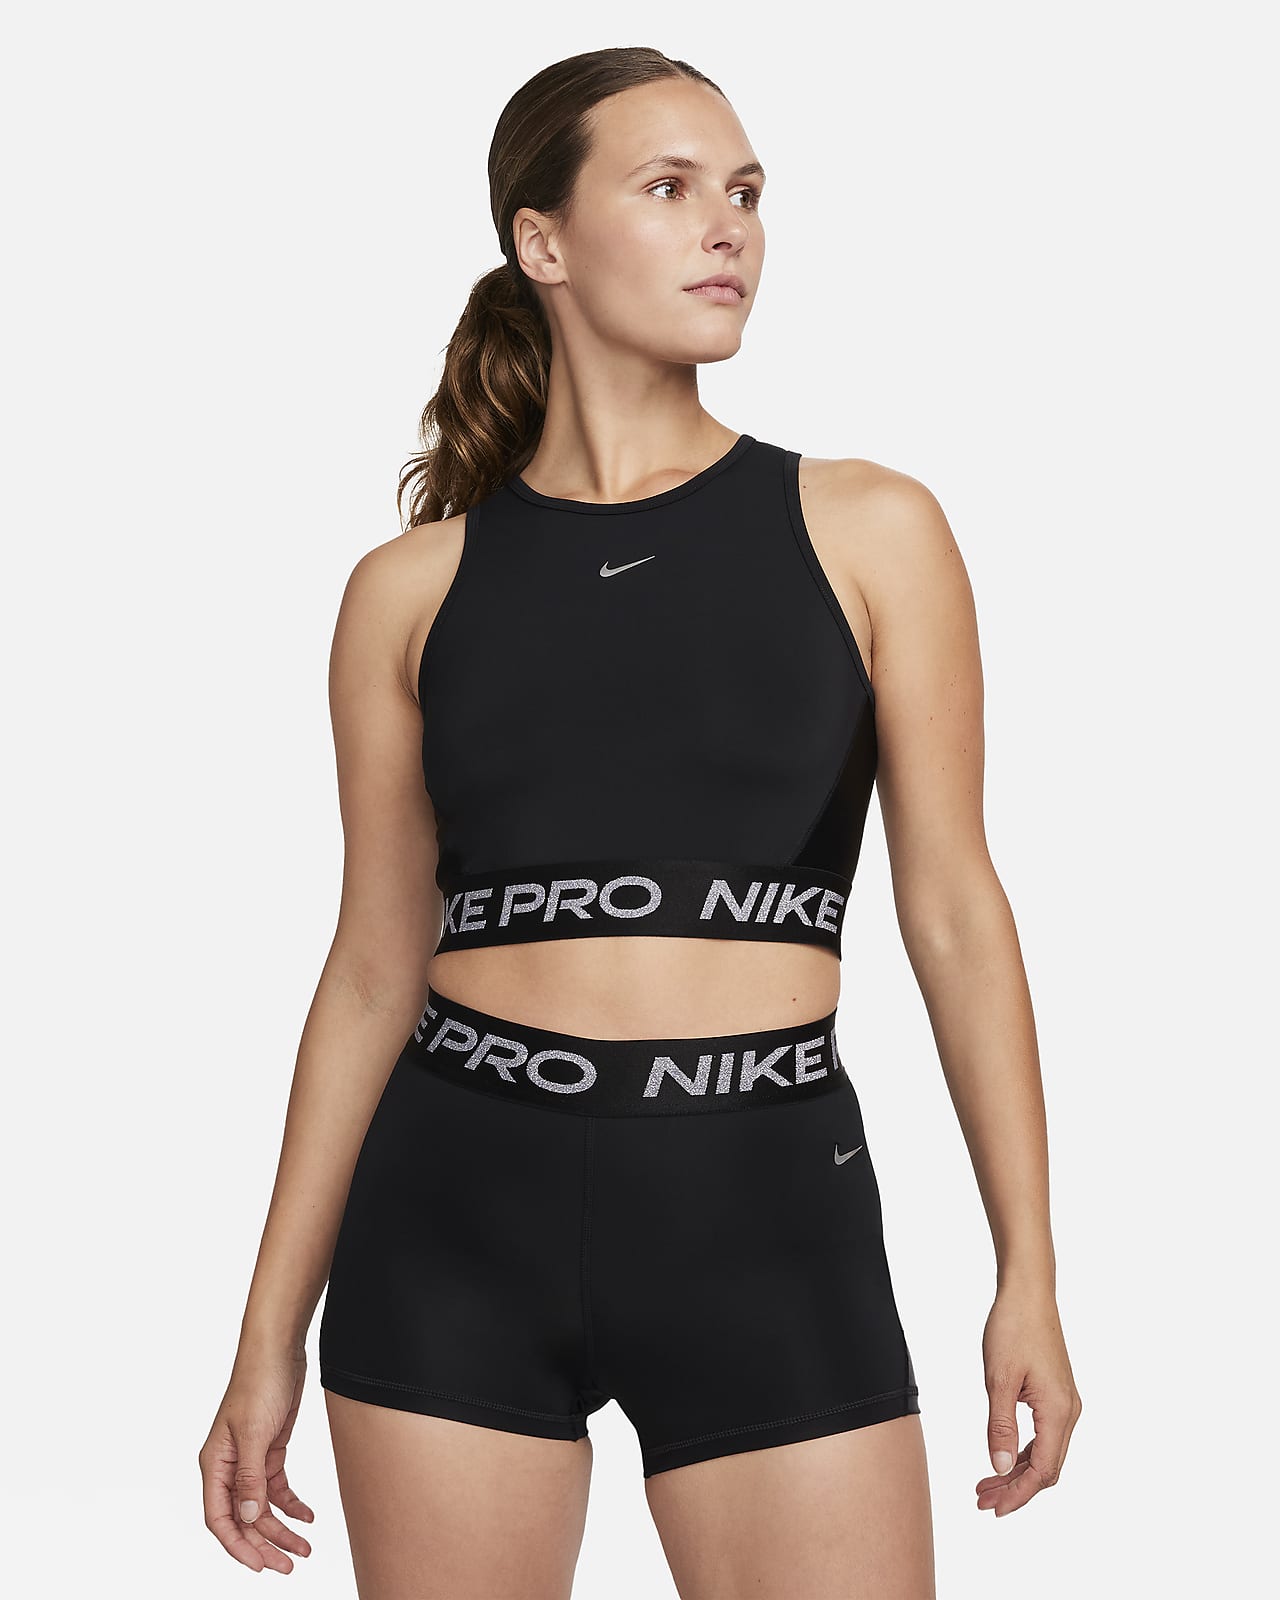 Mujer Rebajas Ropa interior deportiva y Nike Pro Completo. Nike MX